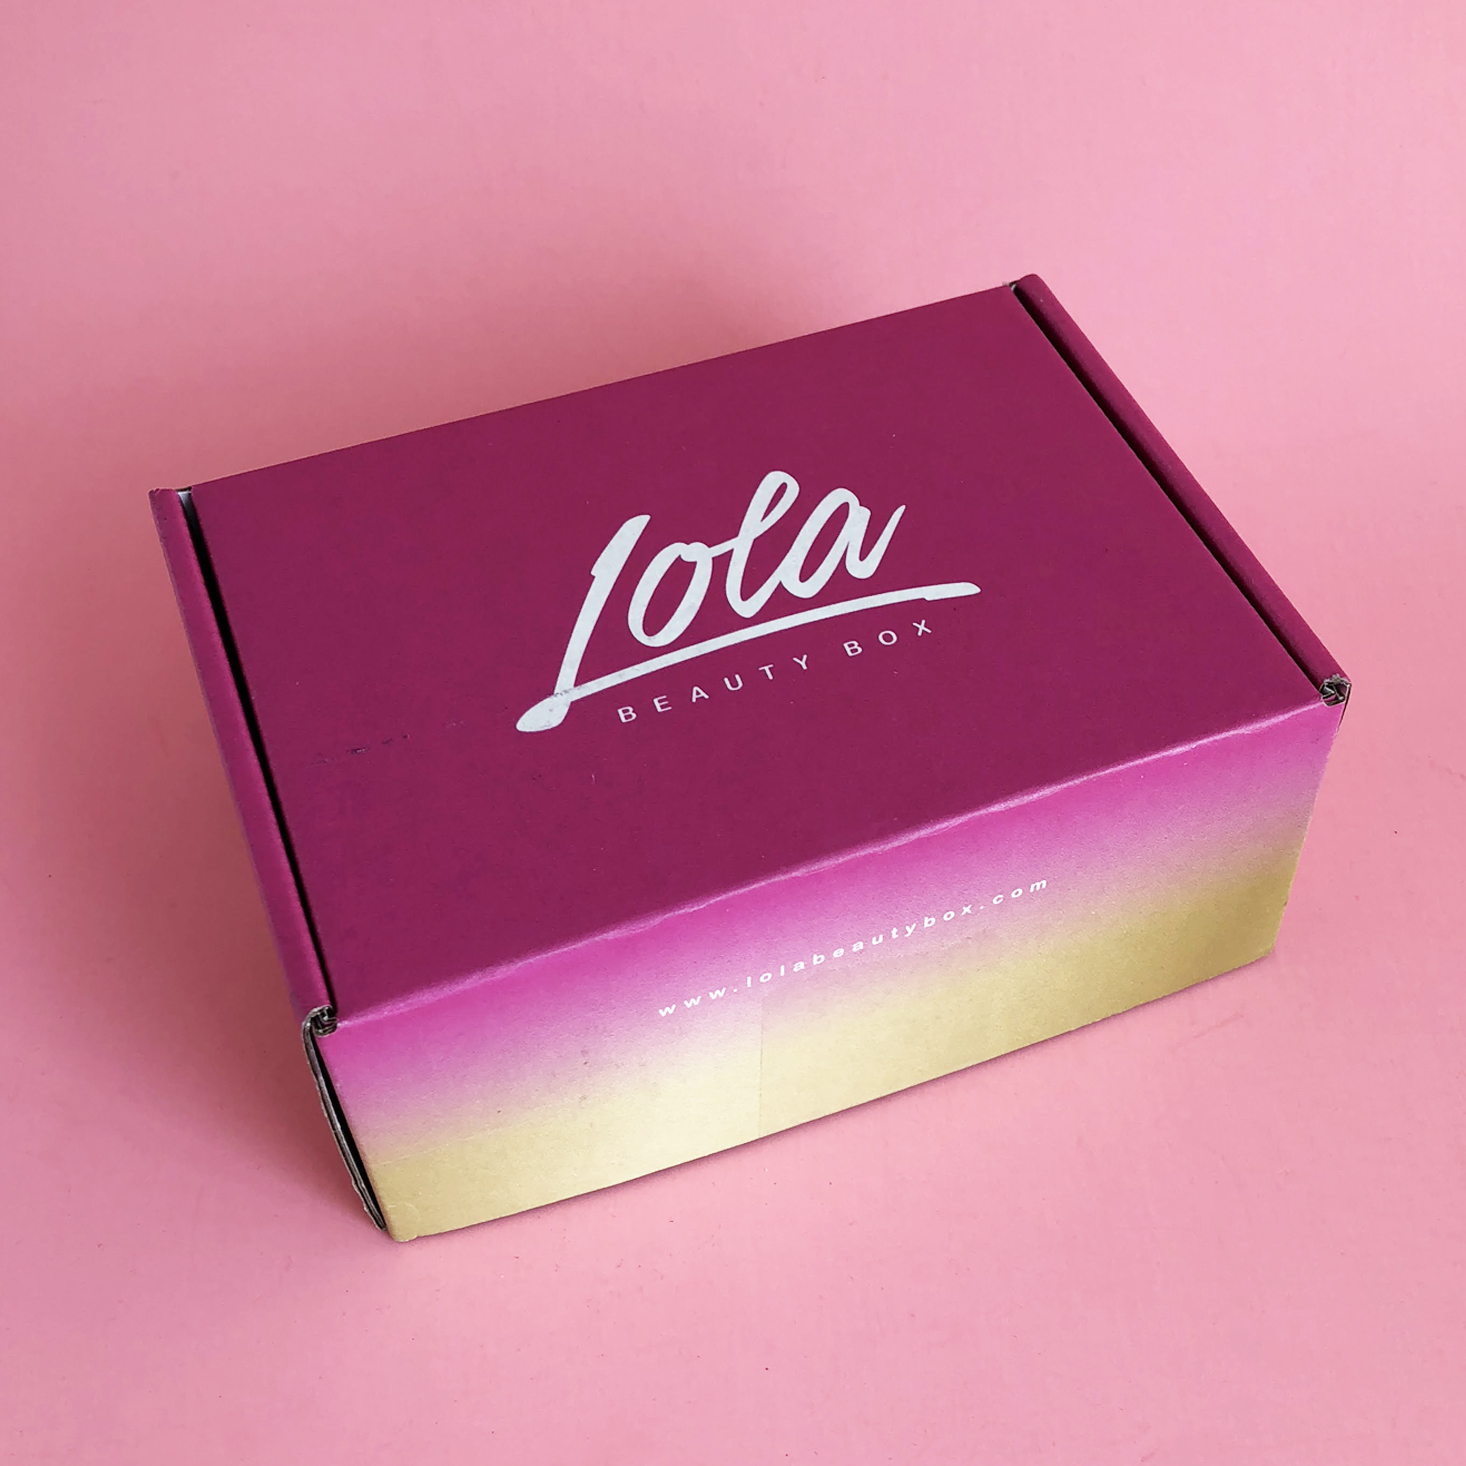 Lola Beauty Box Subscription Review – February 2018